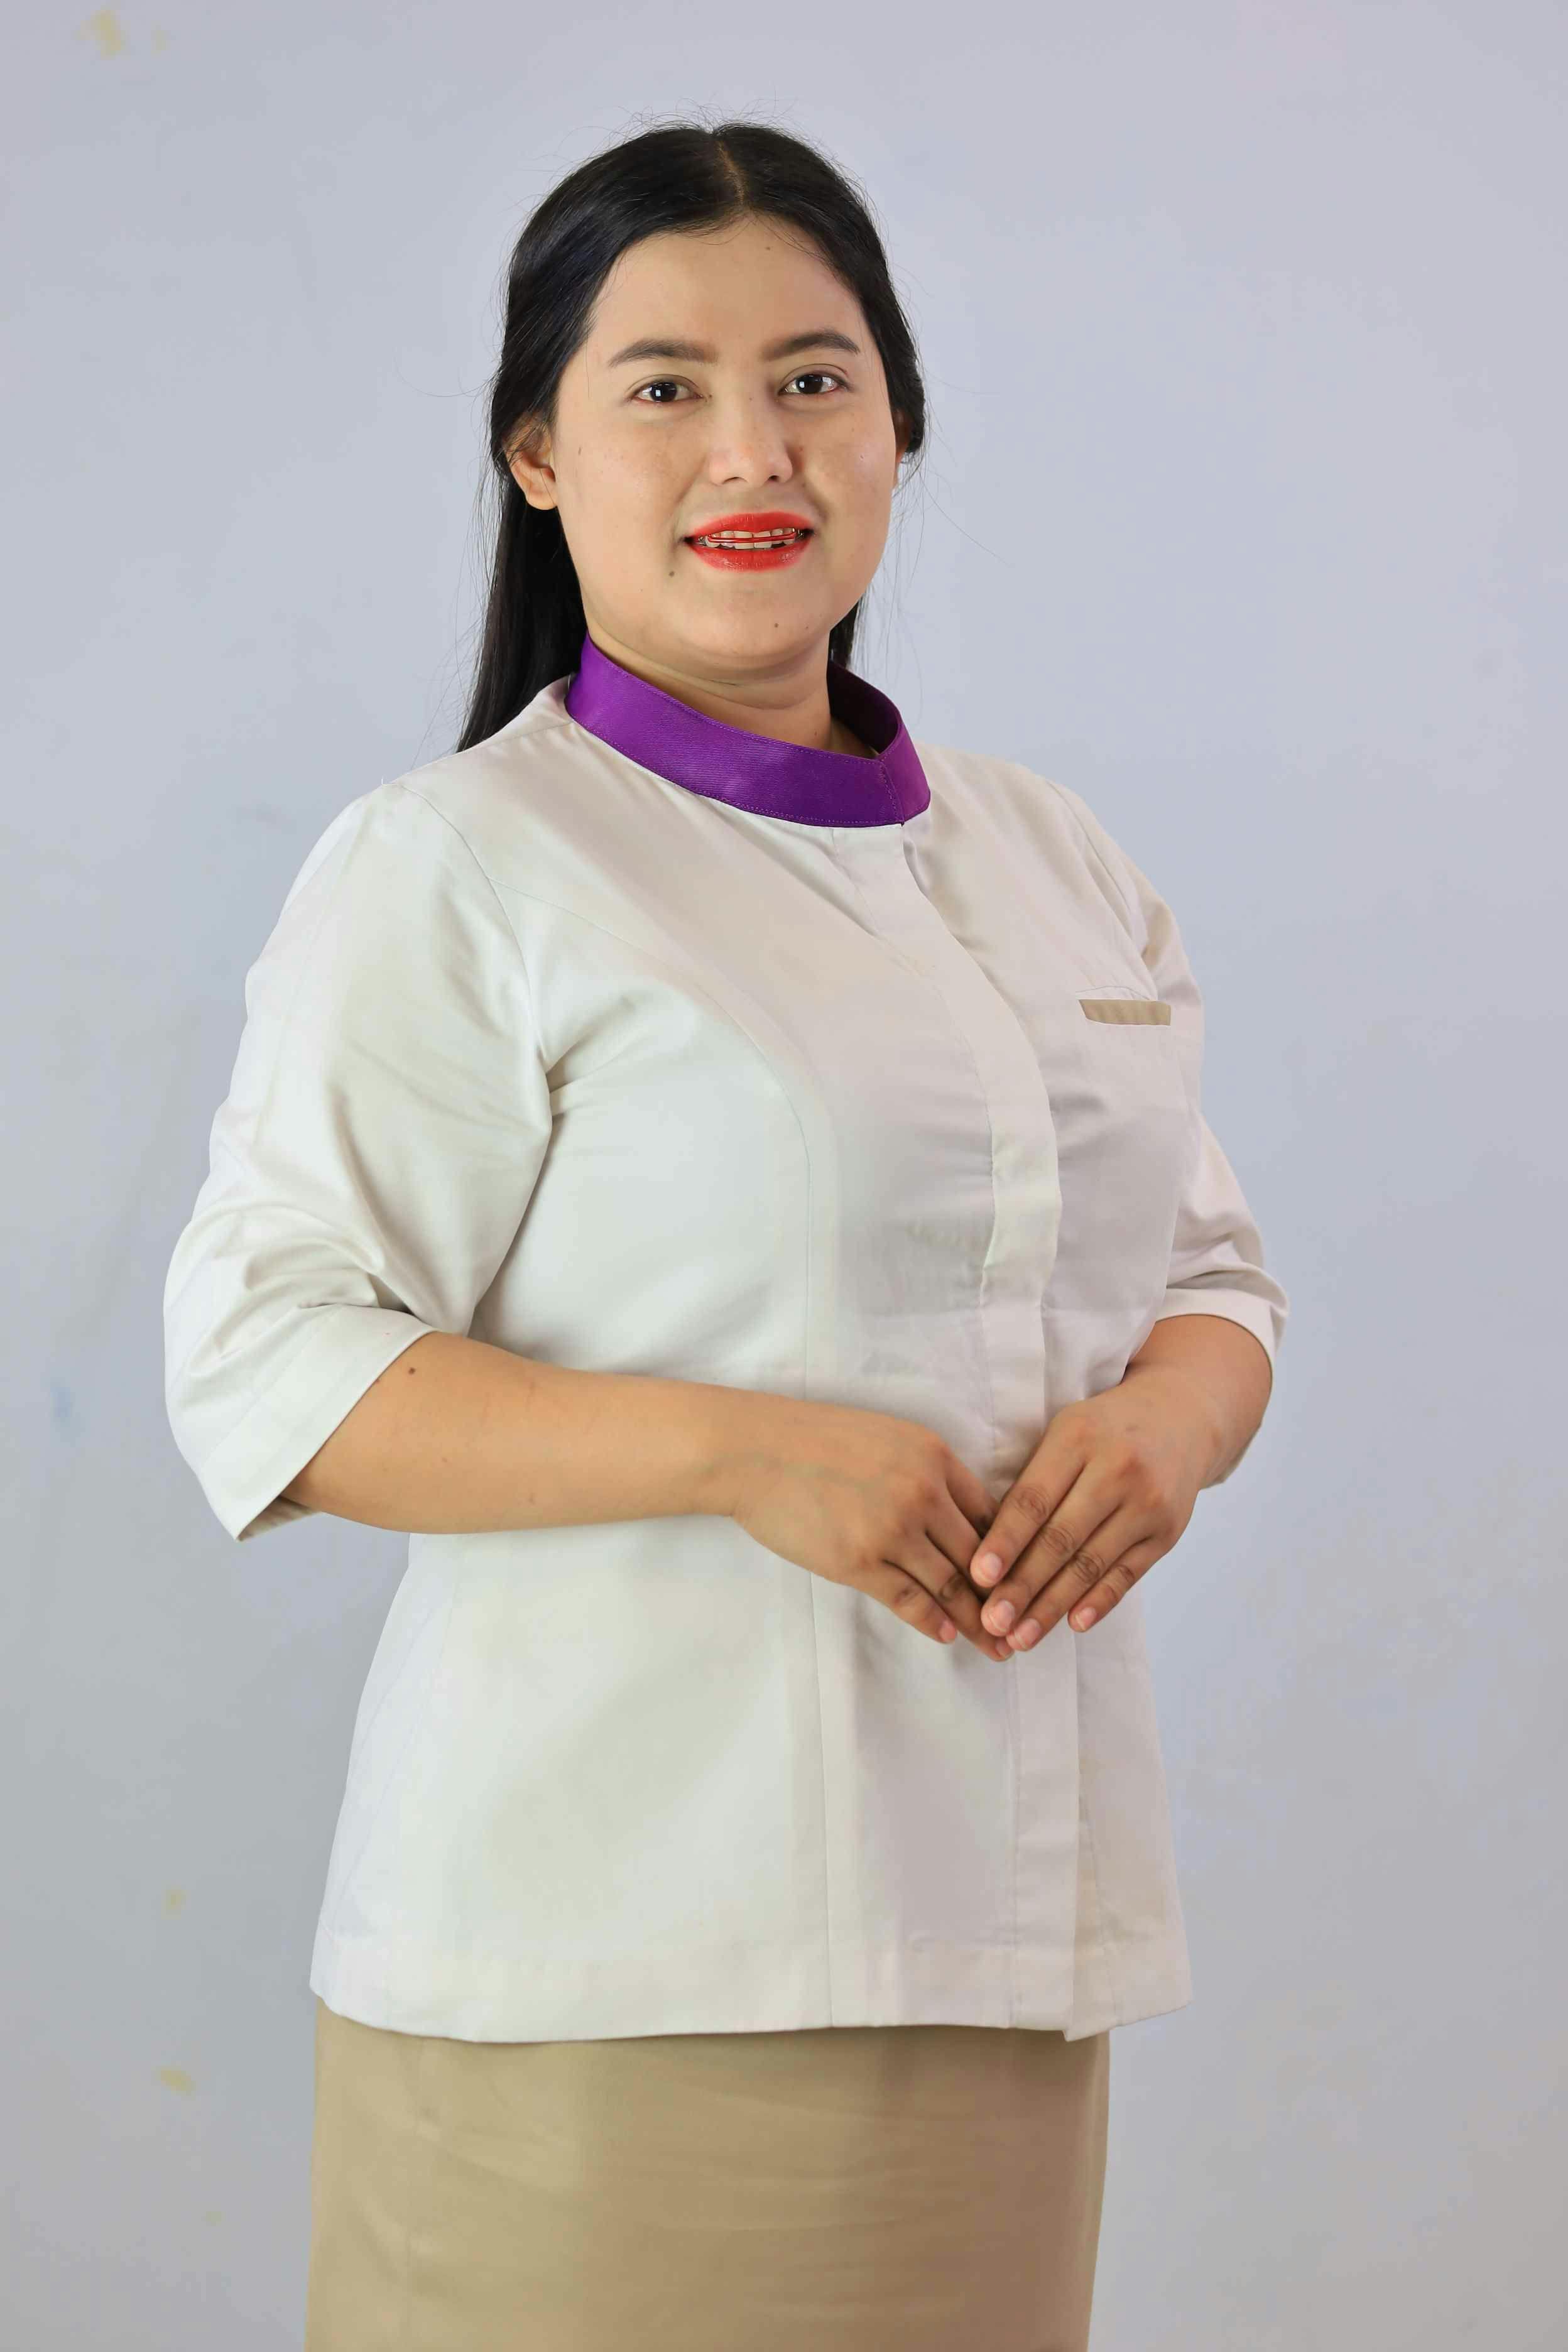 Teacher Wanwisa Yingpasit